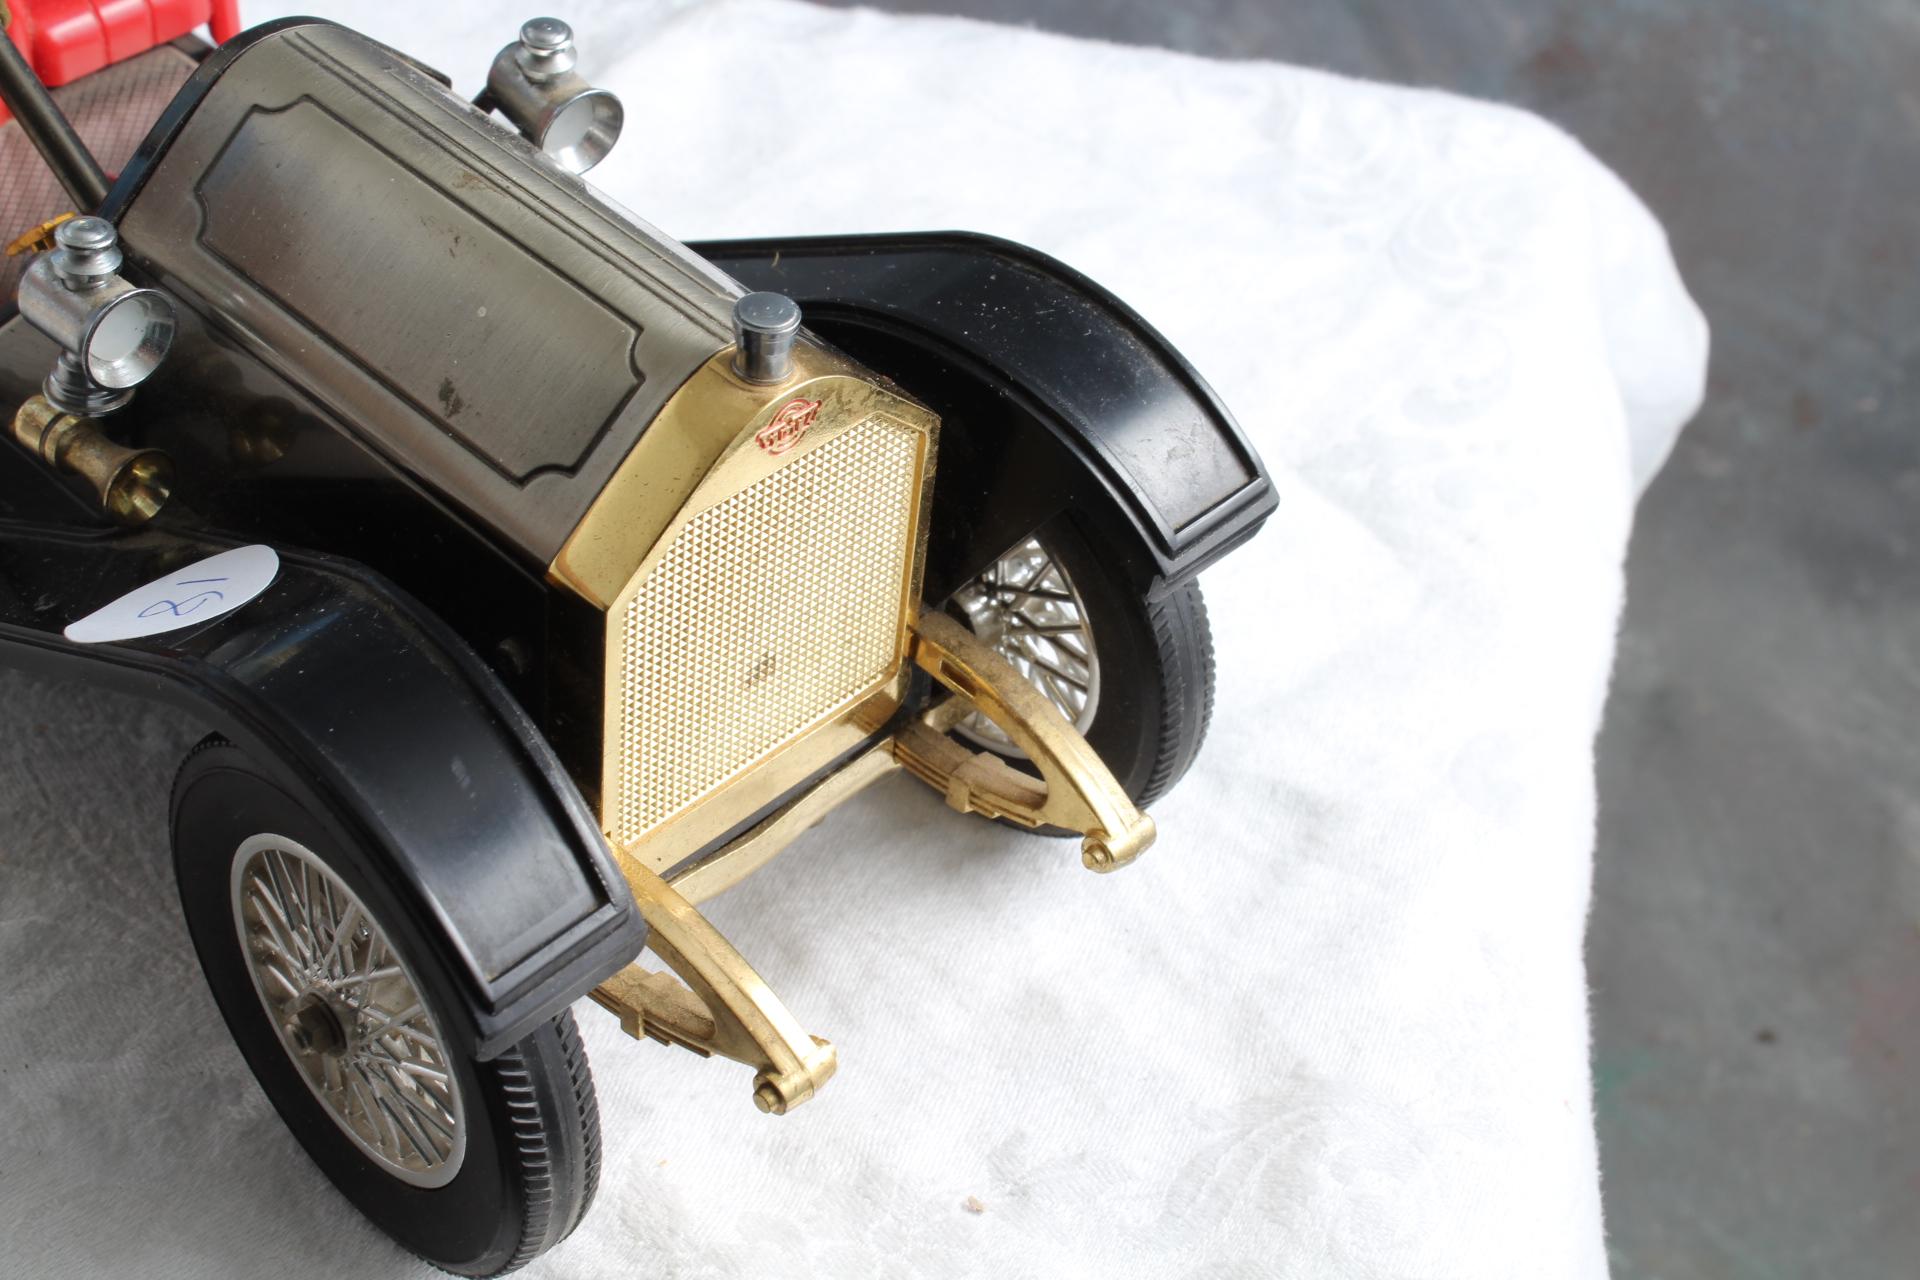 1913 Stutz Bearcat Model Car AM Radio 5 Transistor Battery Operated Working